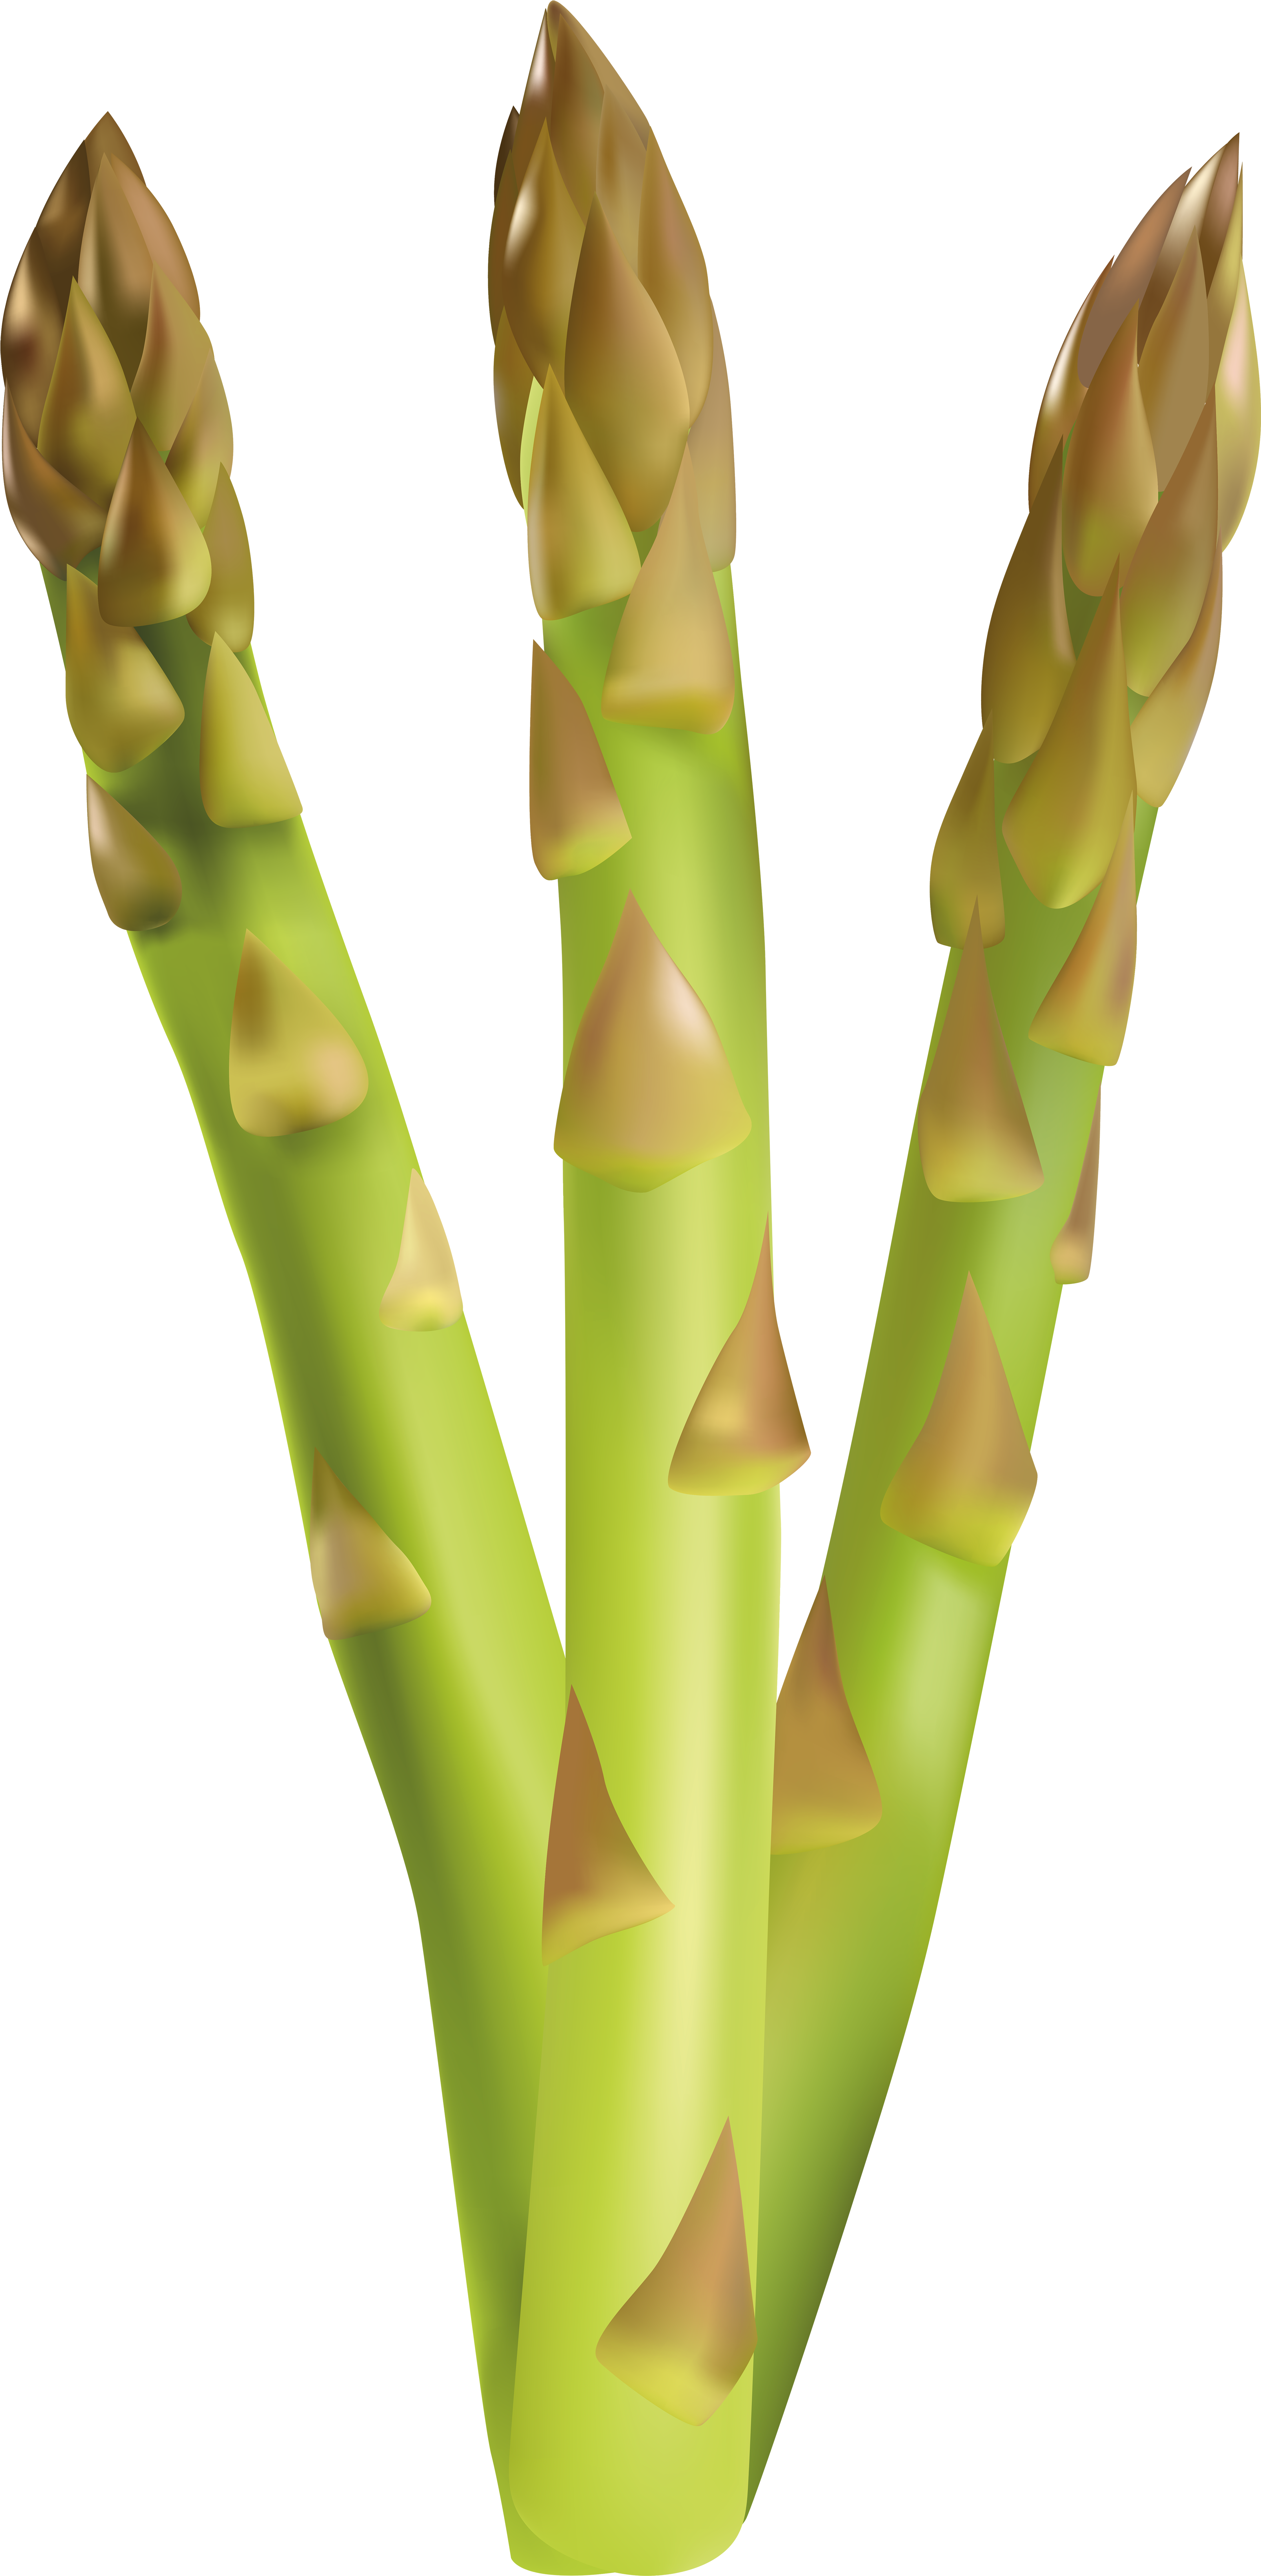 Fresh Asparagus PNG Image Background